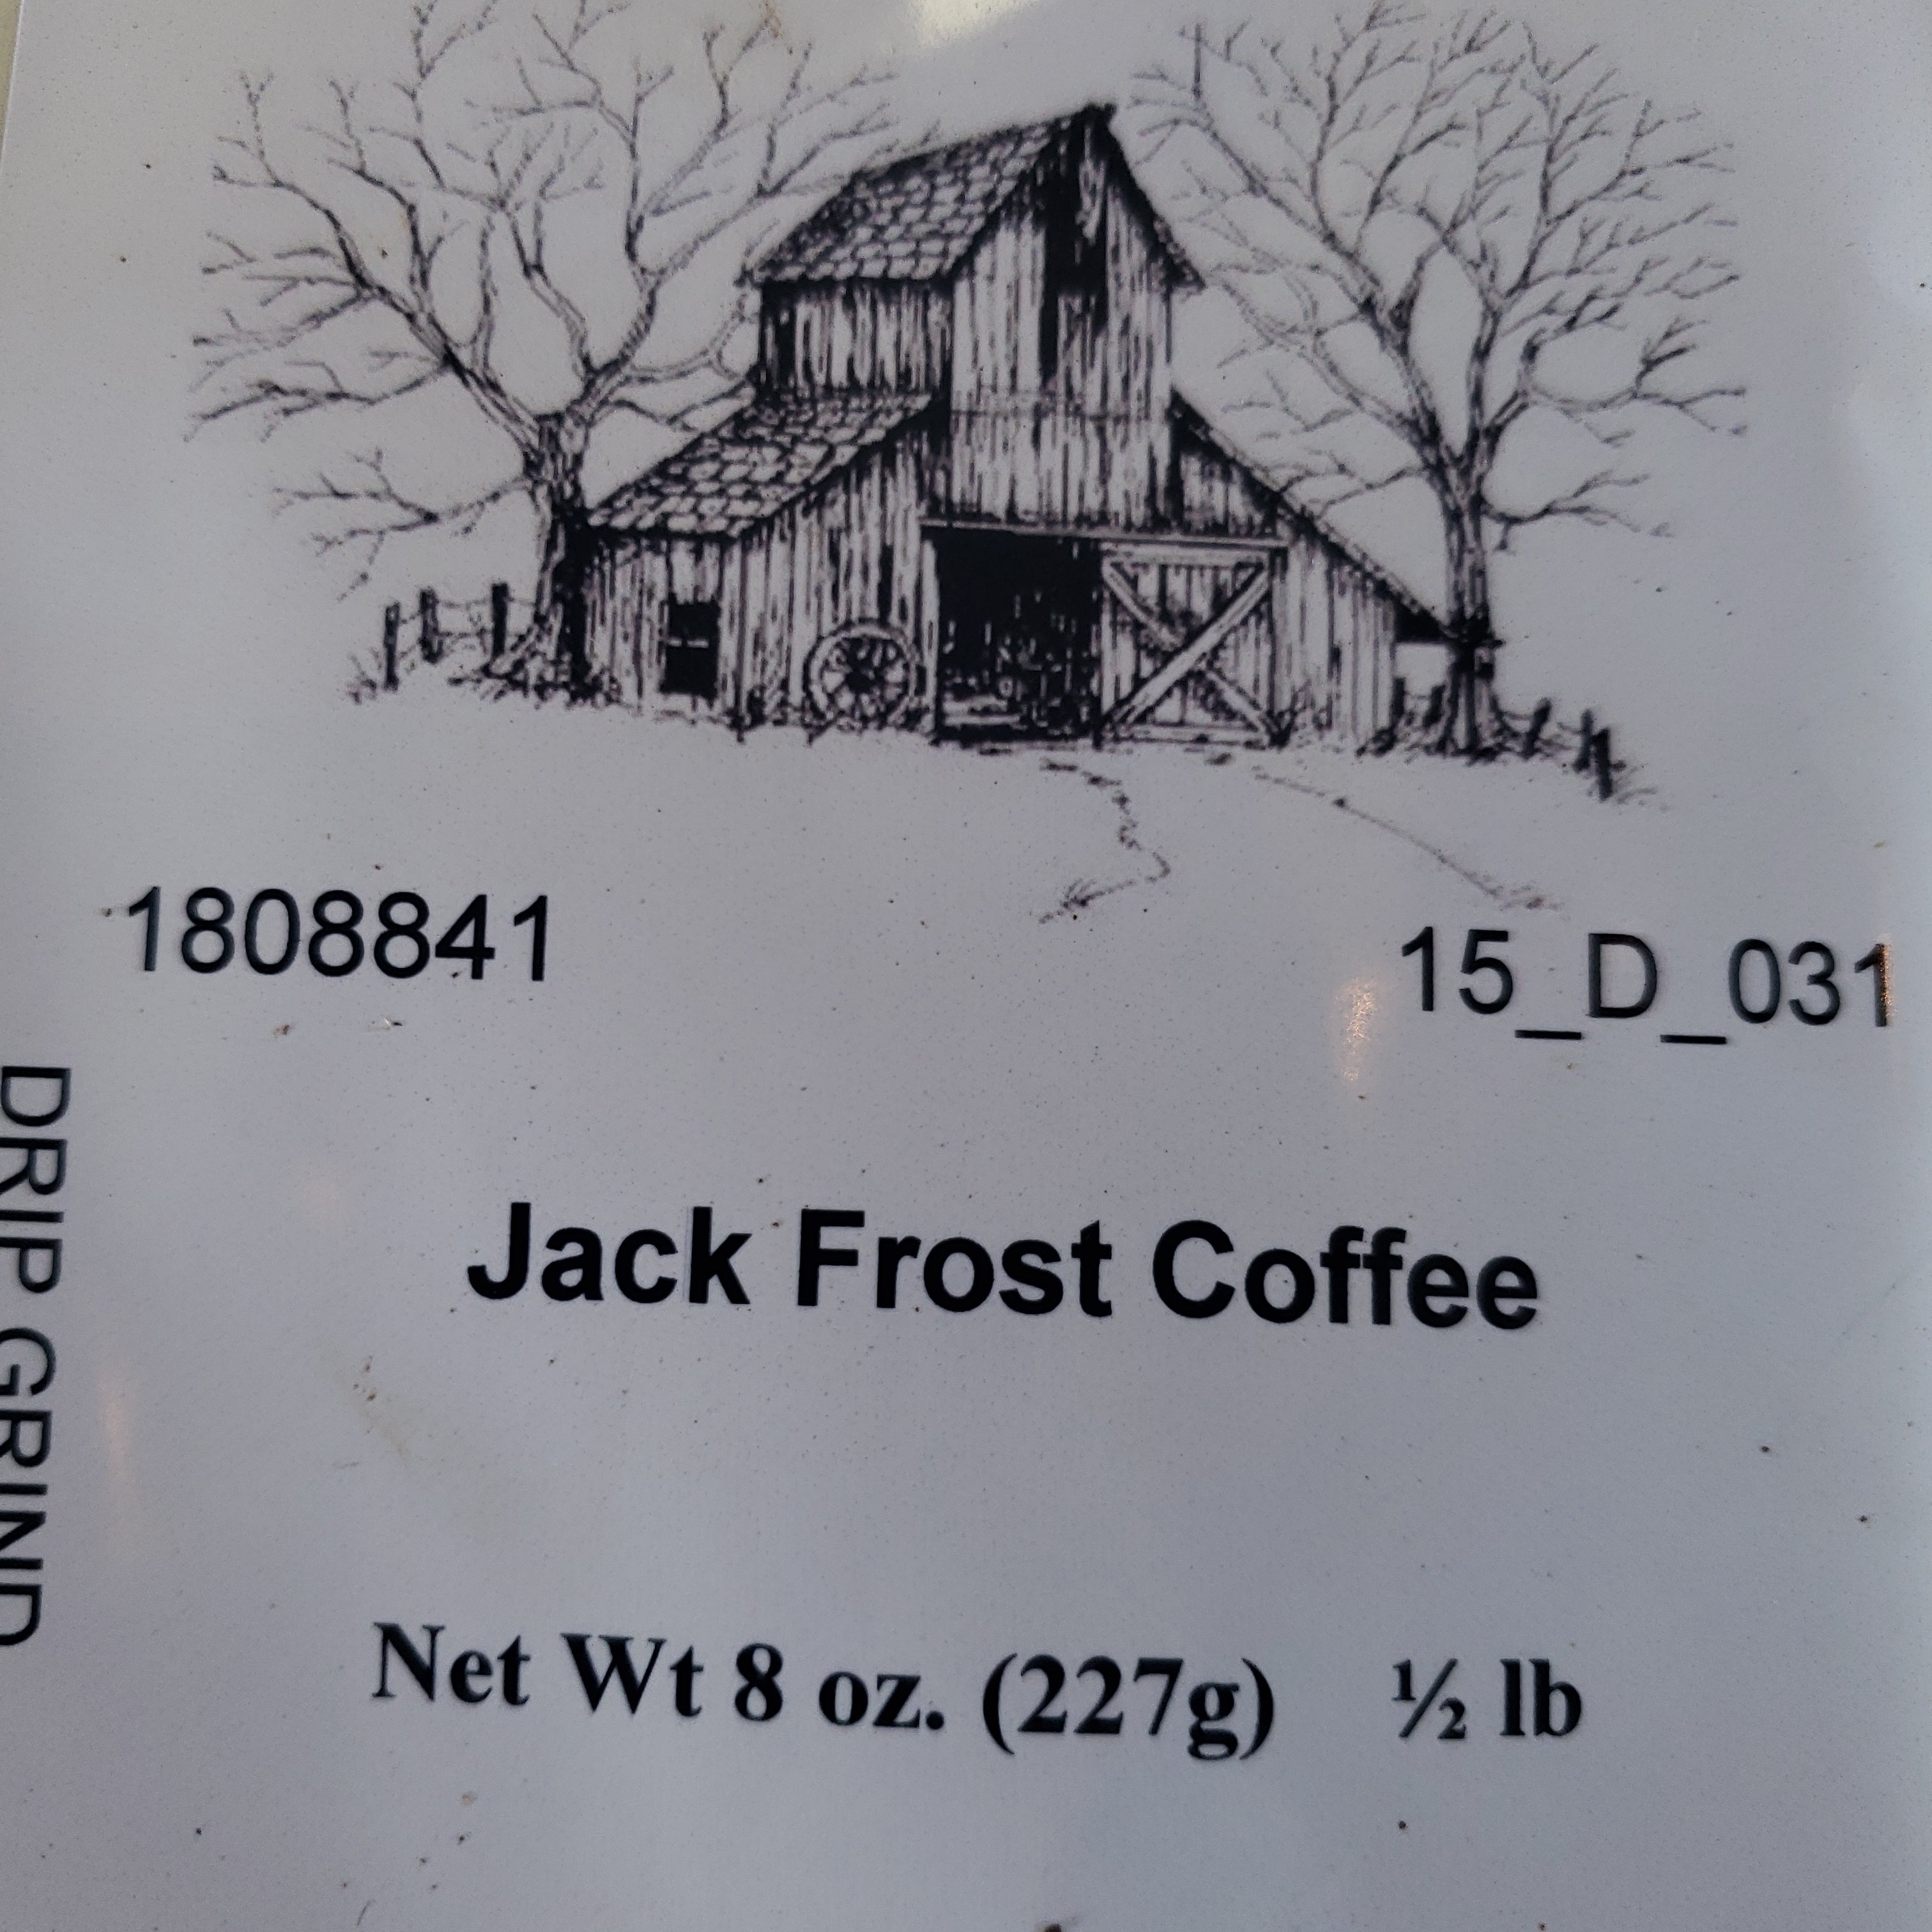 Jack frost coffee